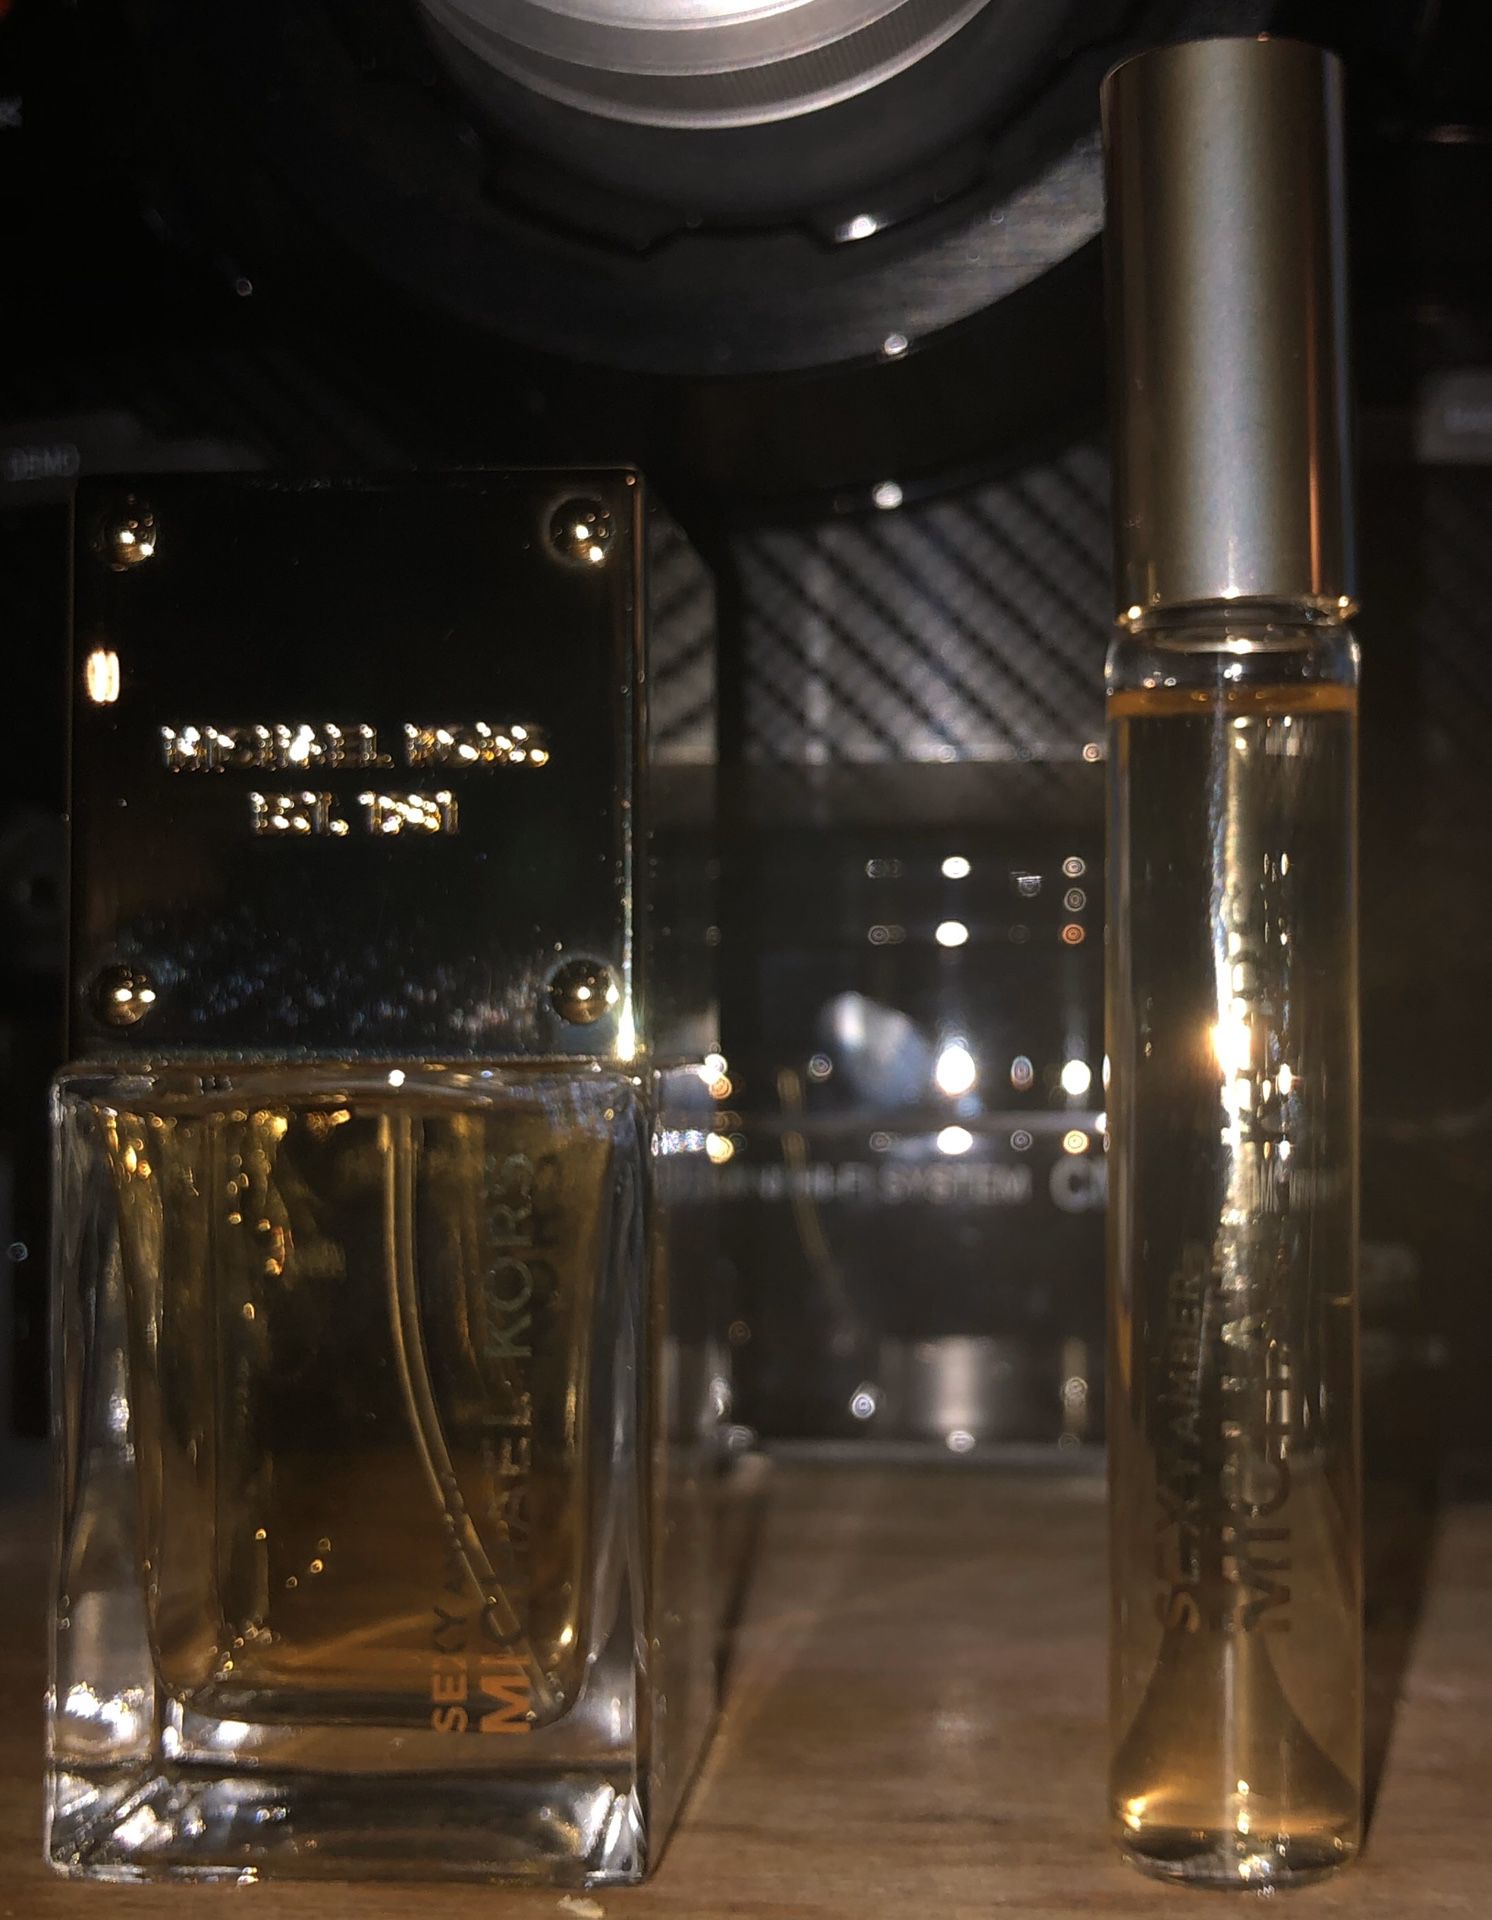 Michael Kors Full size perfume & travel roller-Sexy Amber